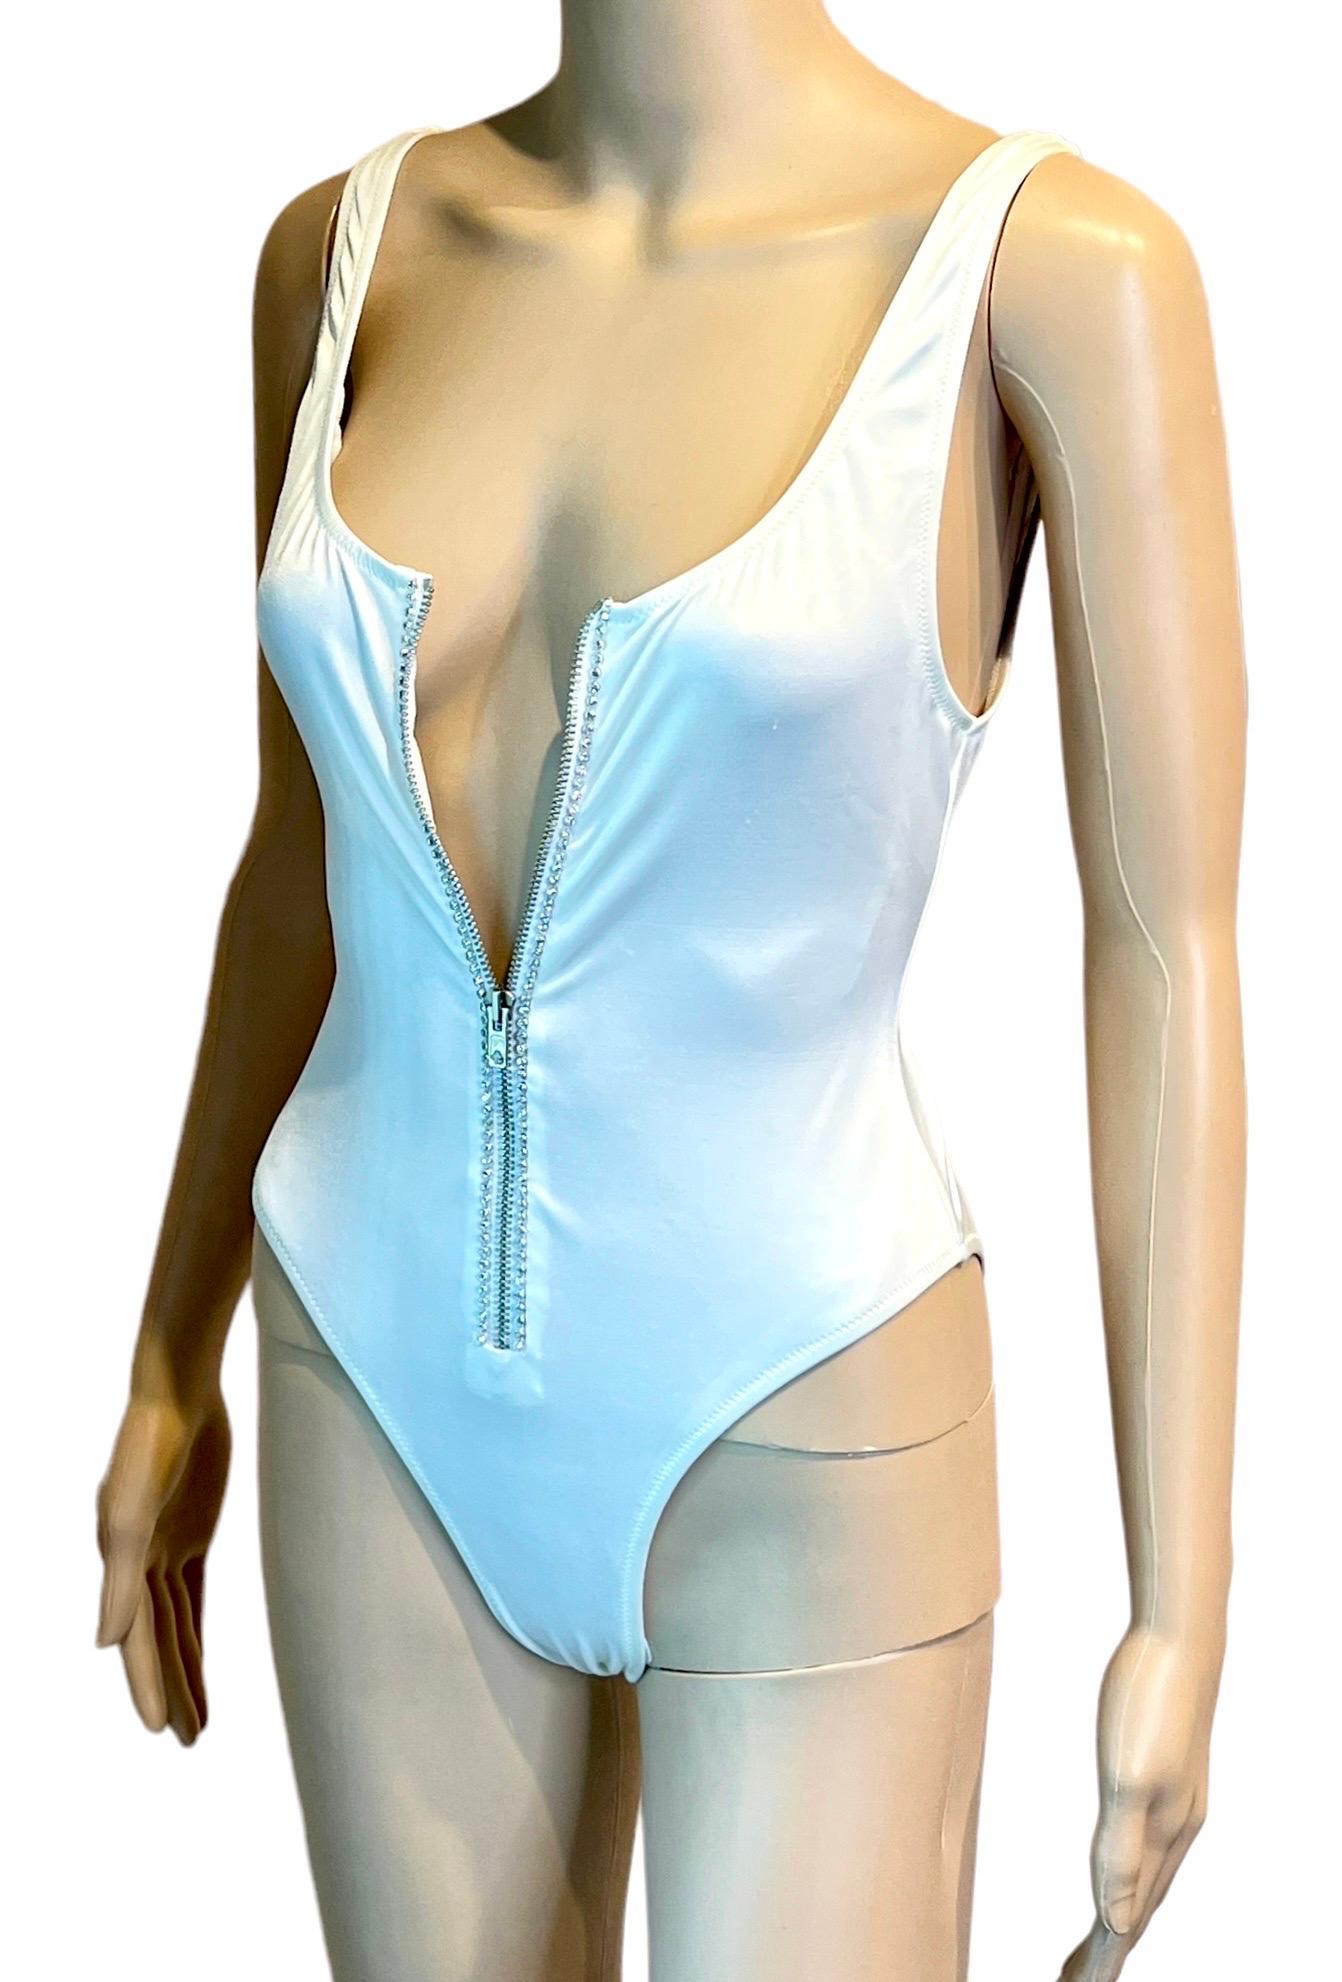 Gianni Versace S/S 1996 Vintage Embellished Crystal Zipper White Bodysuit Swimwear Swimsuit IT 42